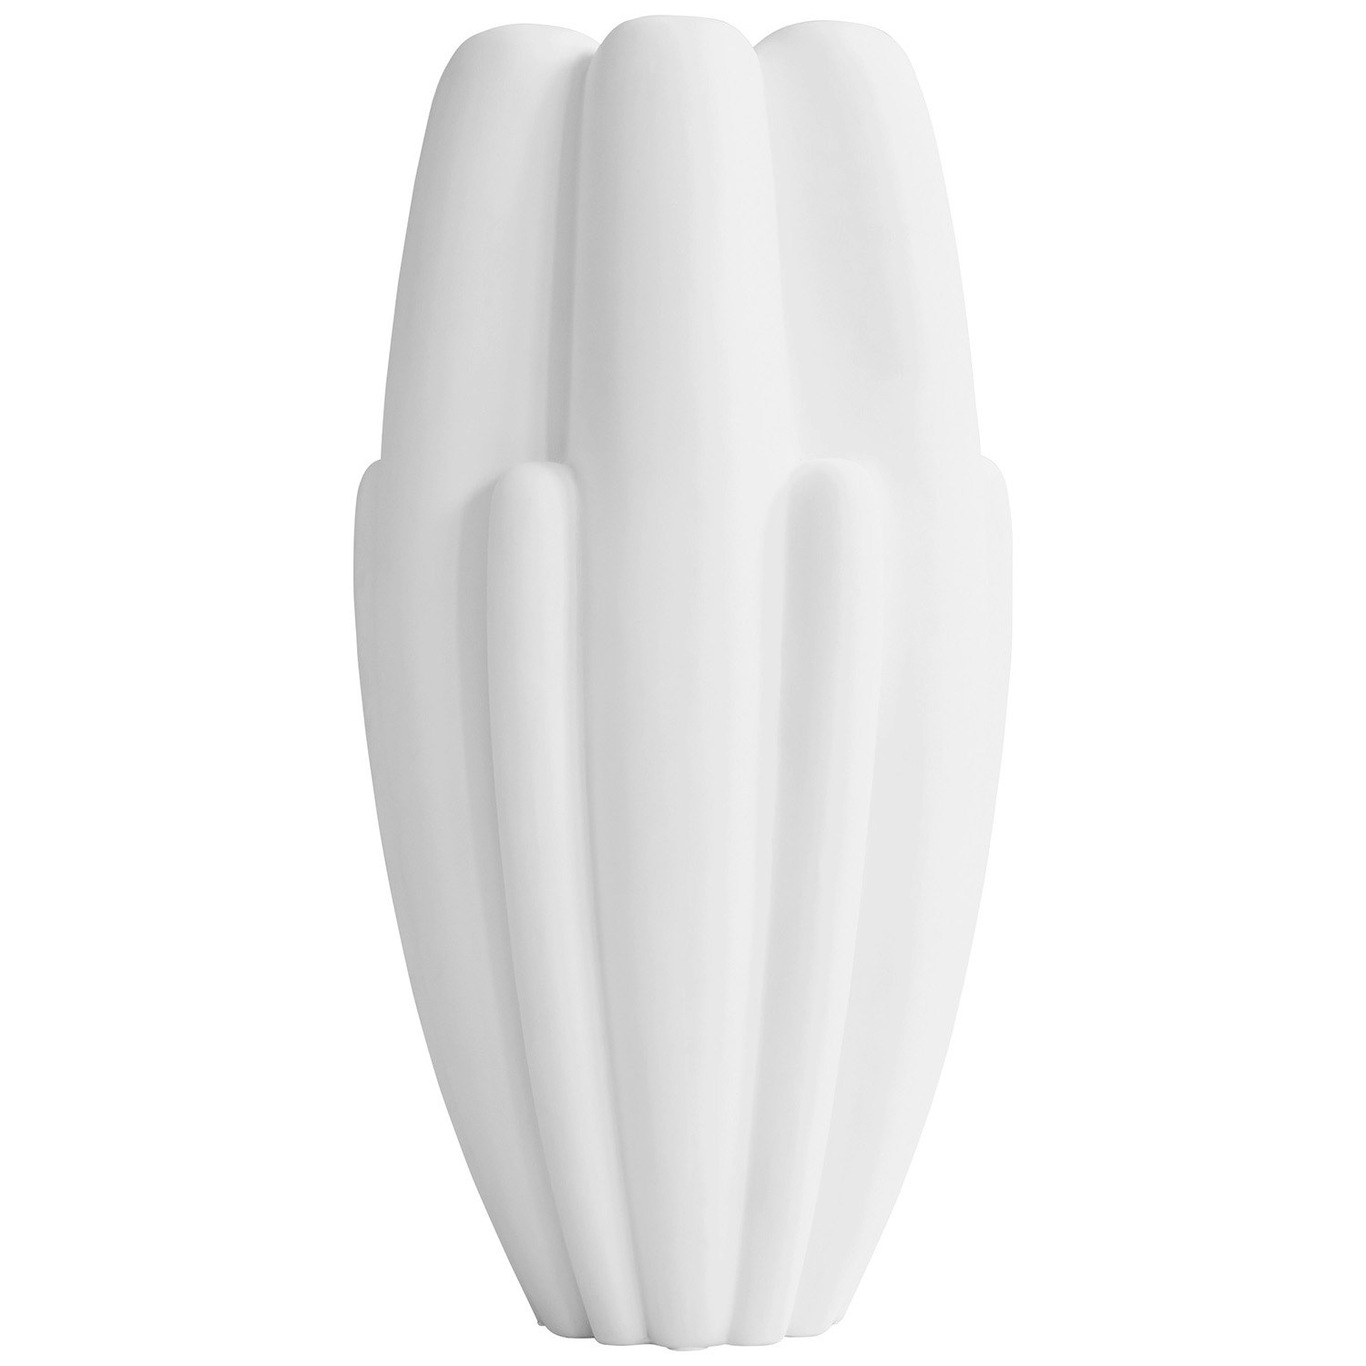 Bloom Slim Vaasi 68 cm, Bone White